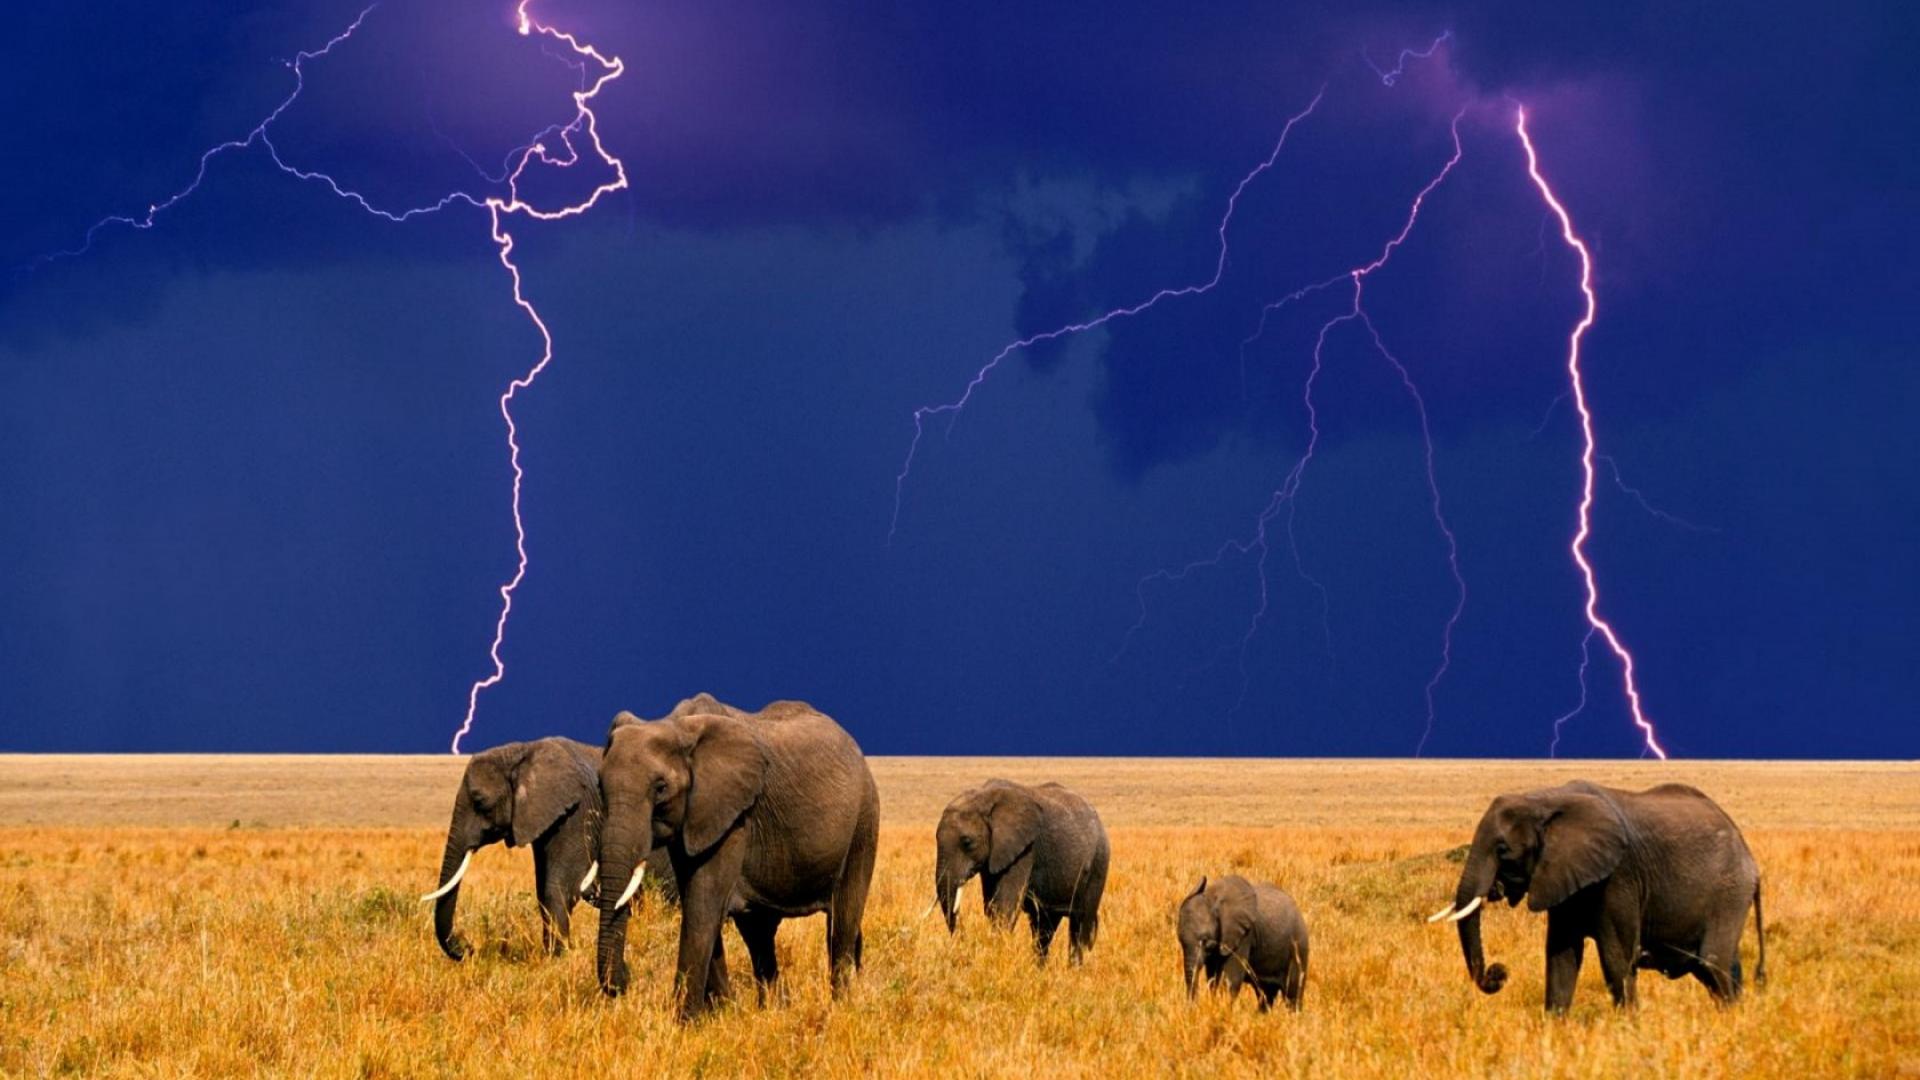 Thunderstorm elephants hd wallpaper - - HQ Desktop